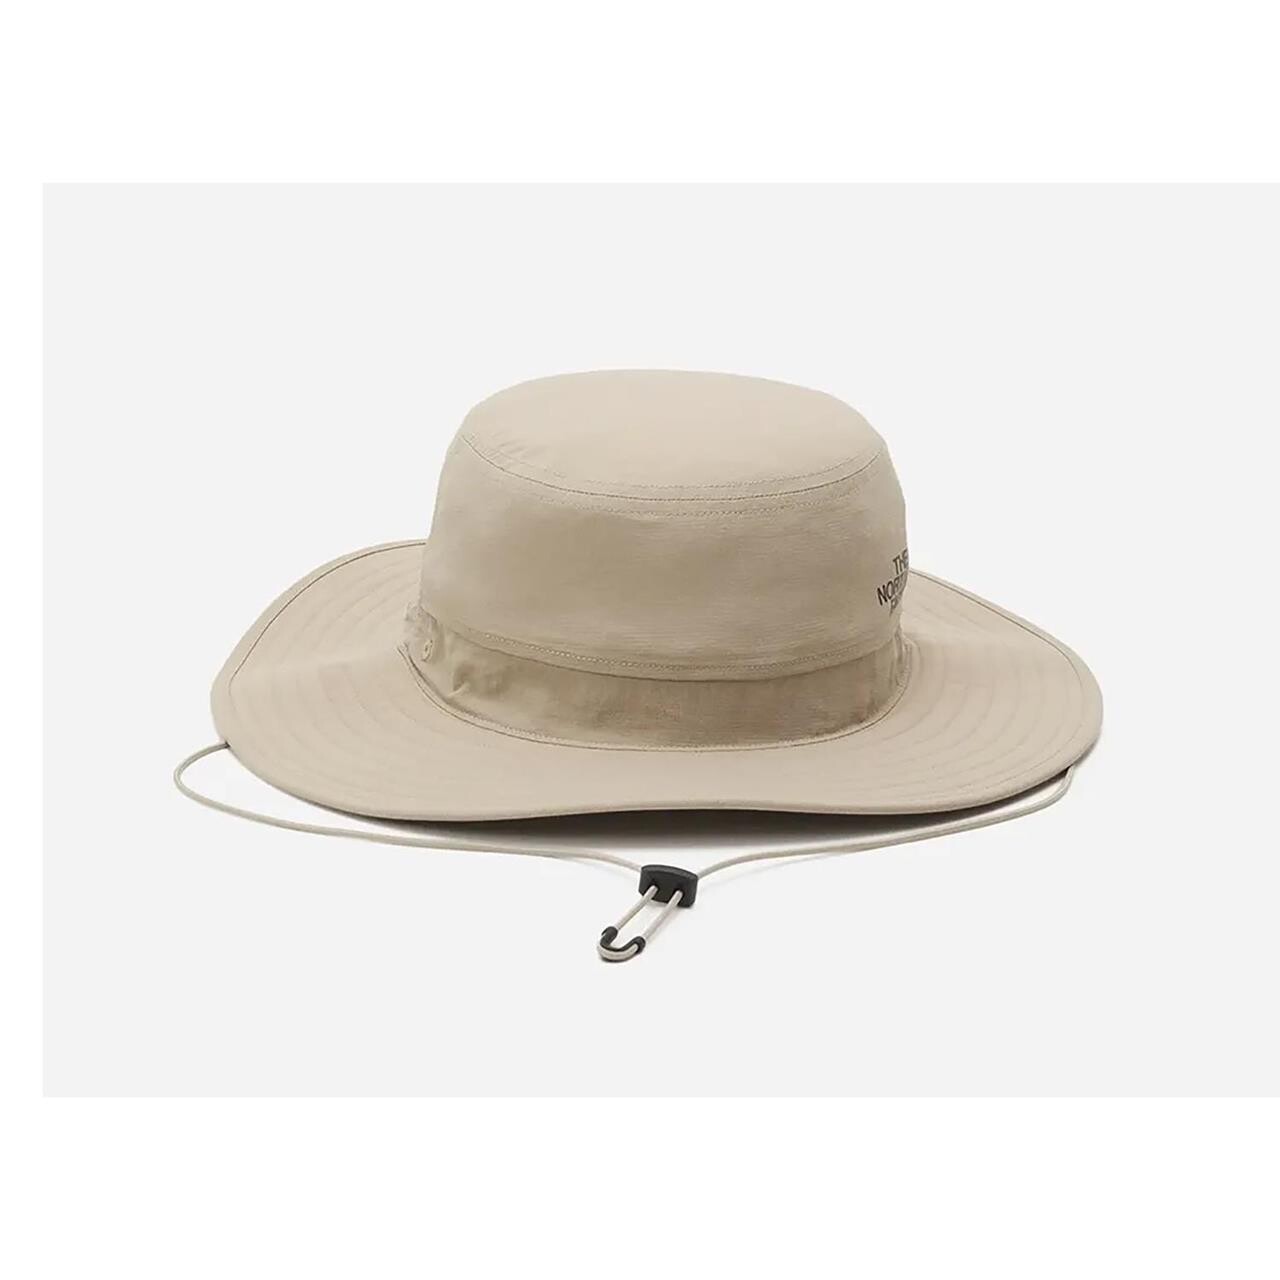 12: The North Face Horizon Breeze Brimmer Hat (Beige (DUNE BEIGE) Small/medium)